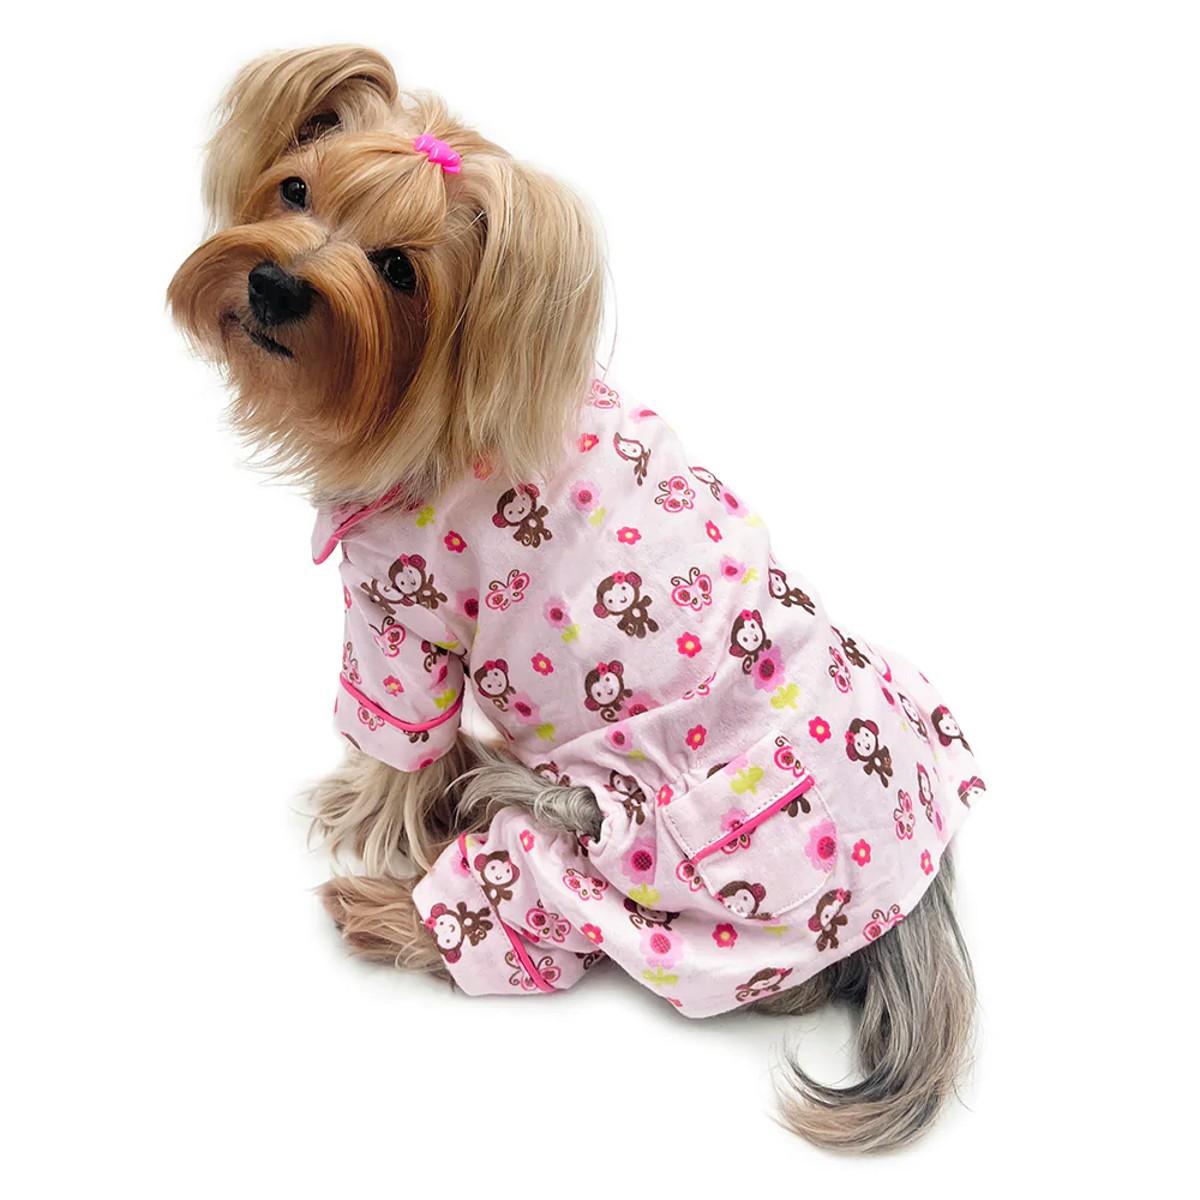 Klippo Girly Monkey Flannel Dog Pajamas with 2 Pockets - Pink